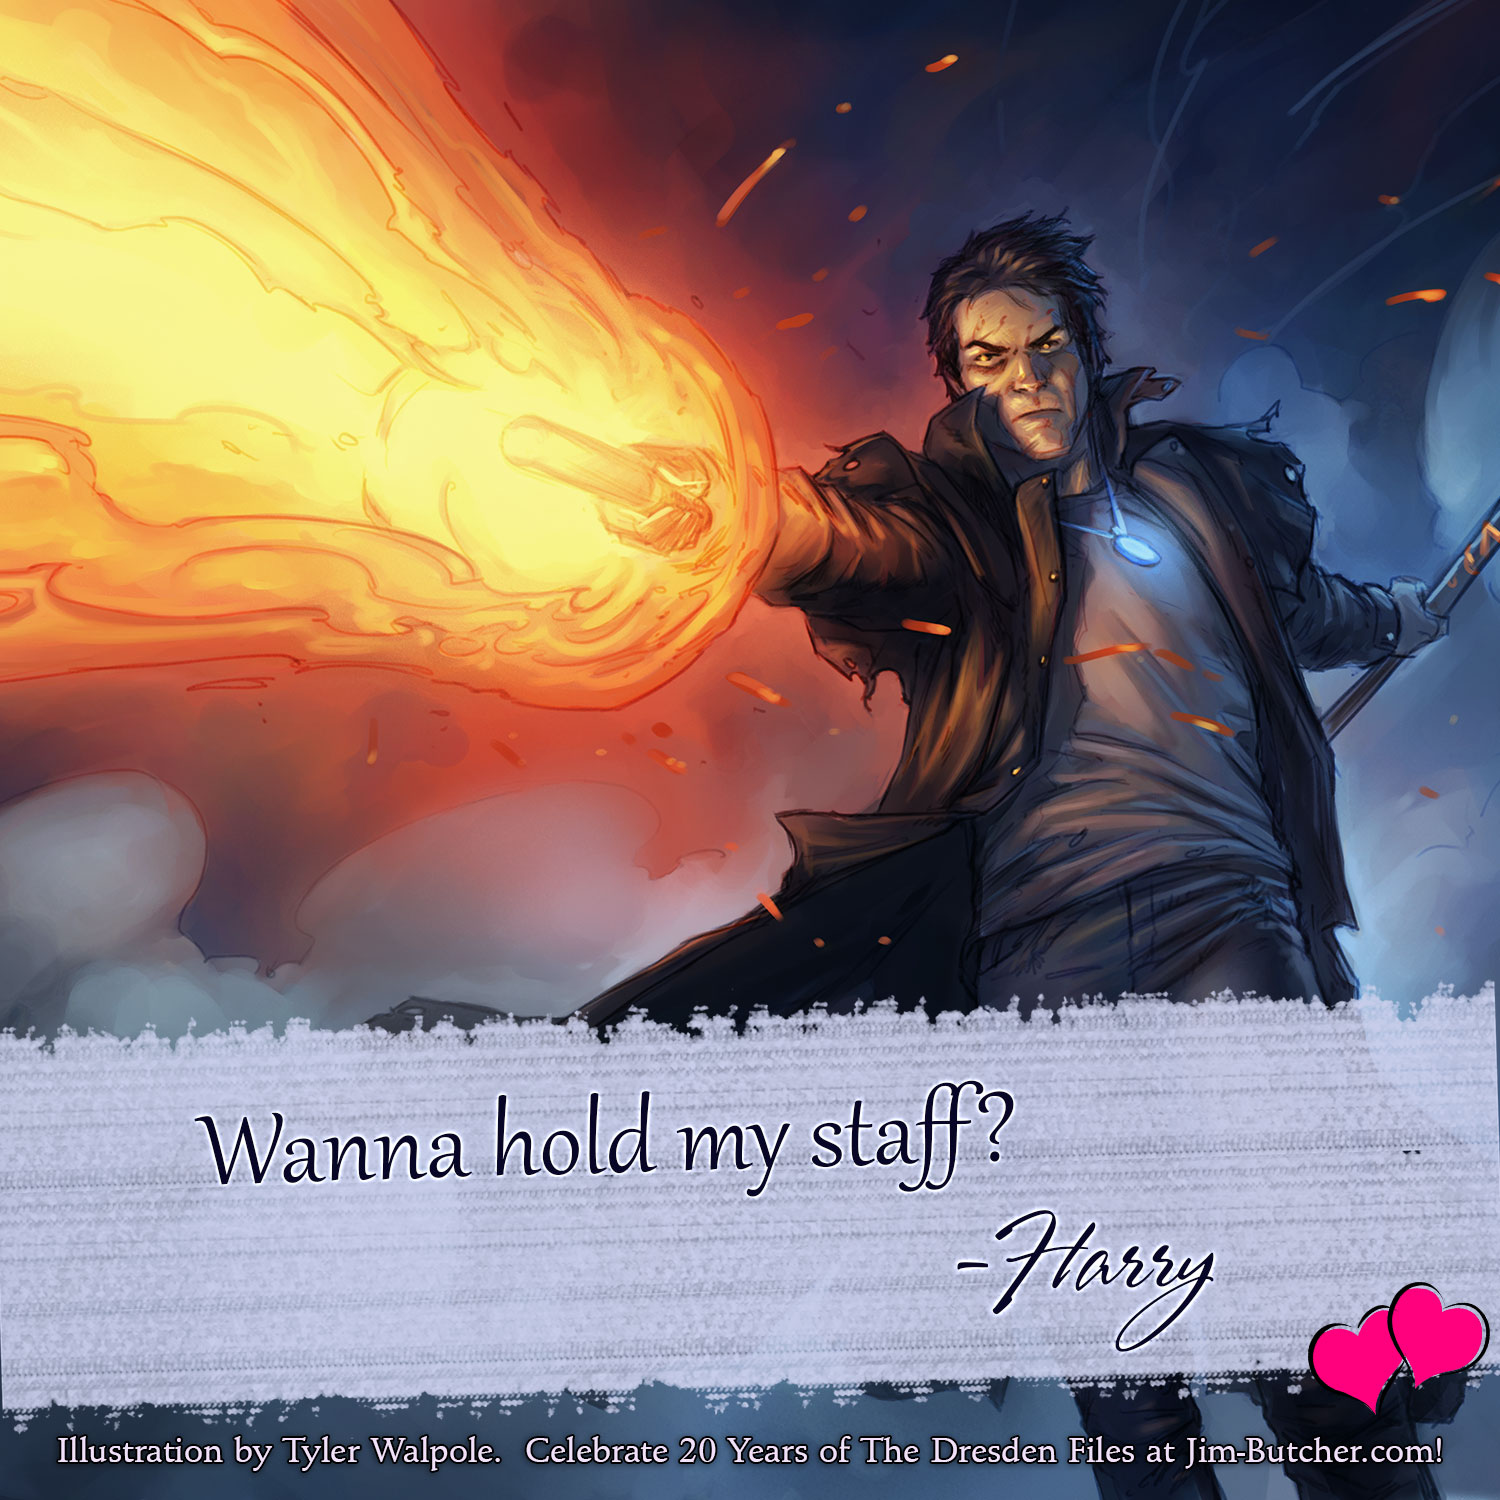 Harry: Wanna hold my staff?